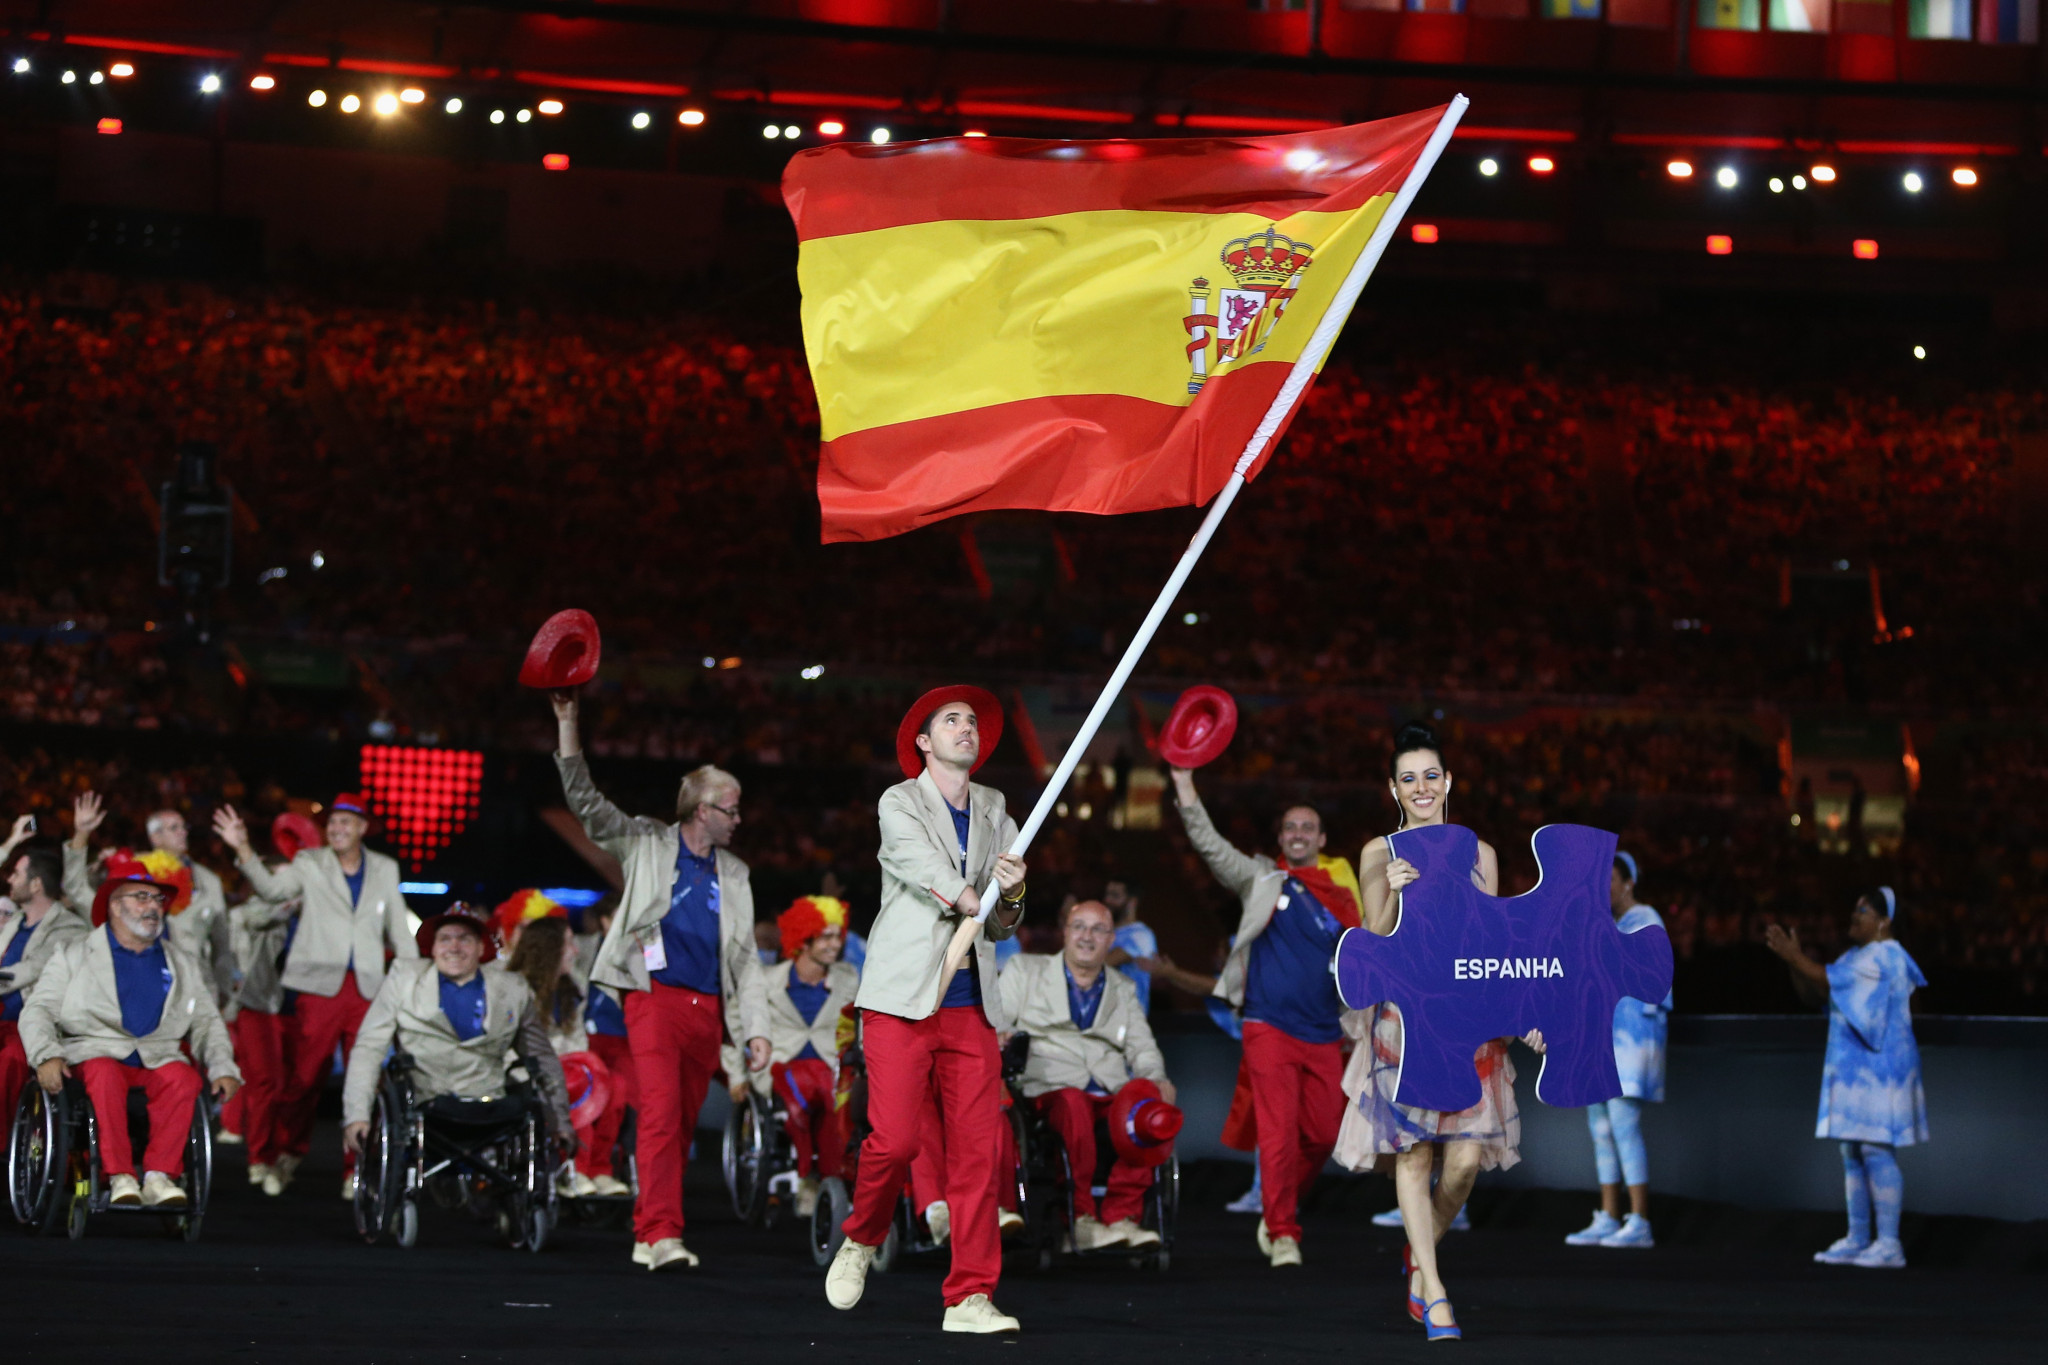 Spanish Paralympic Committee announces Dingonatura as new sponsor